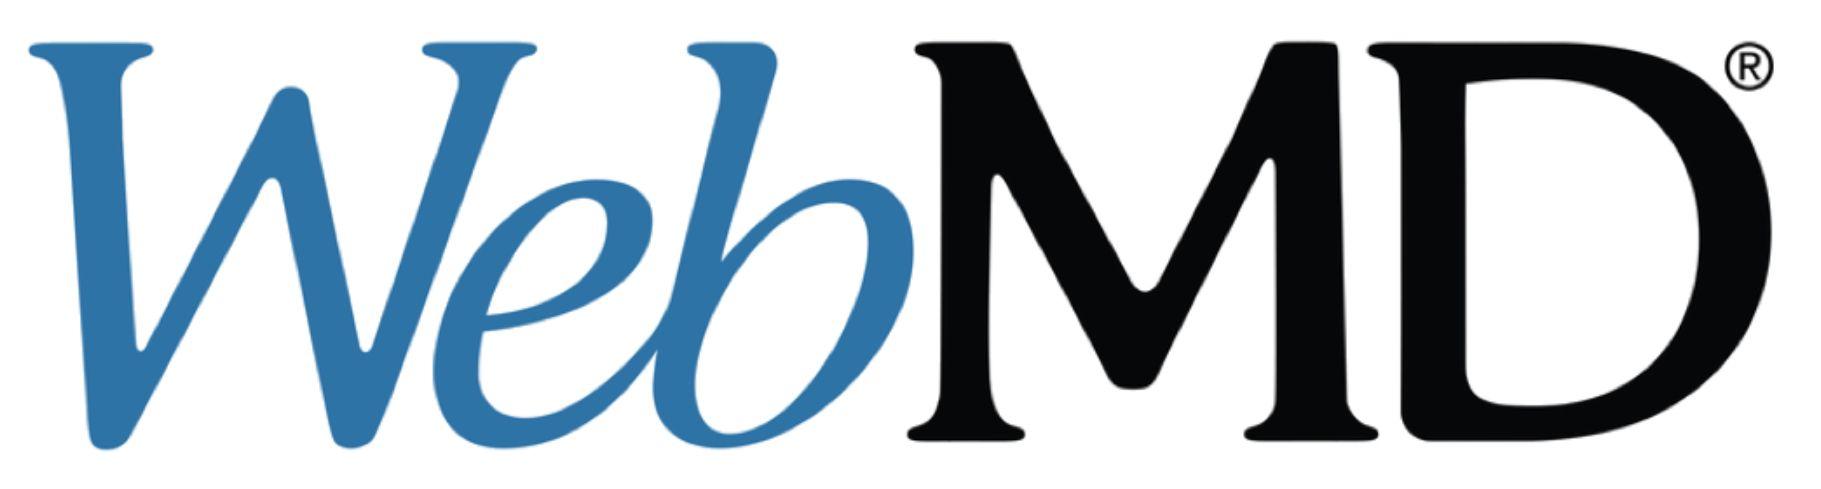 Webmd.com Logo - WEBMD